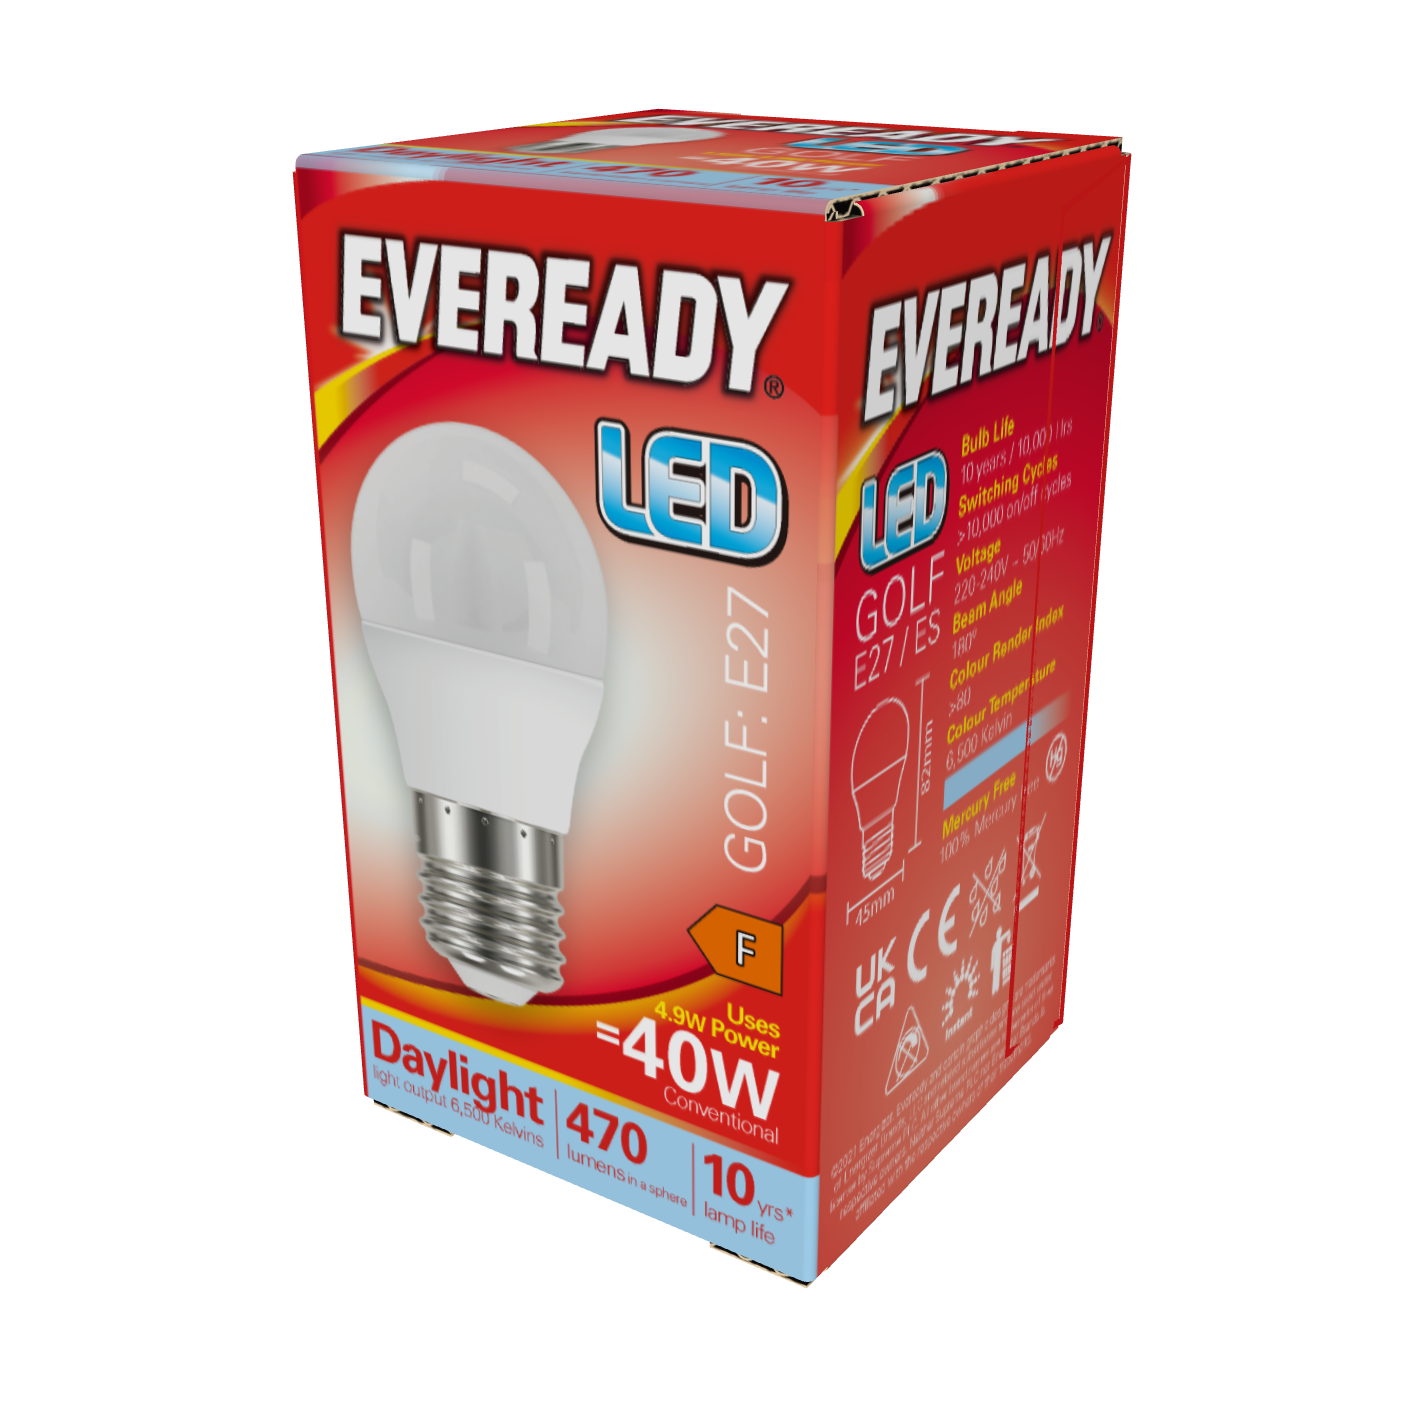 Eveready LED Golf E27 (ES) 470 lm 4,9 W 6.500 K (Tageslicht), 1er-Box